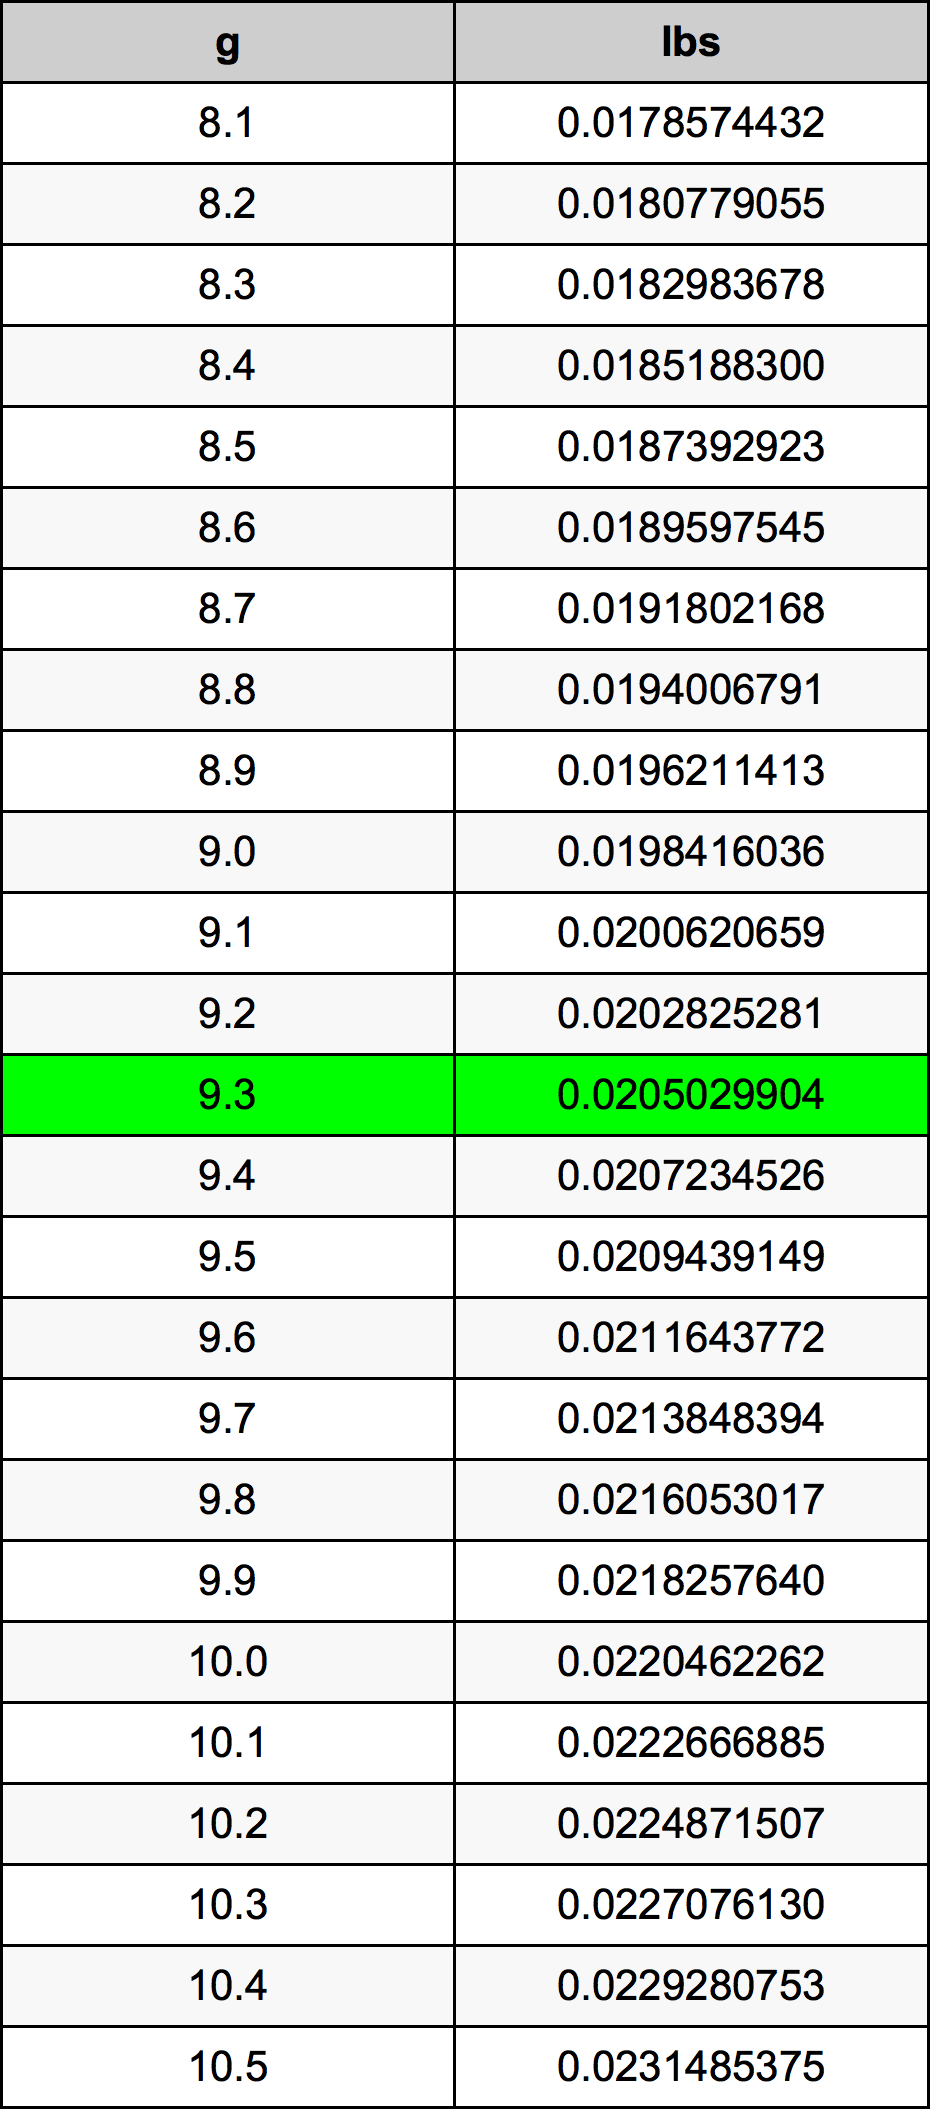 9.3 غرام جدول تحويل